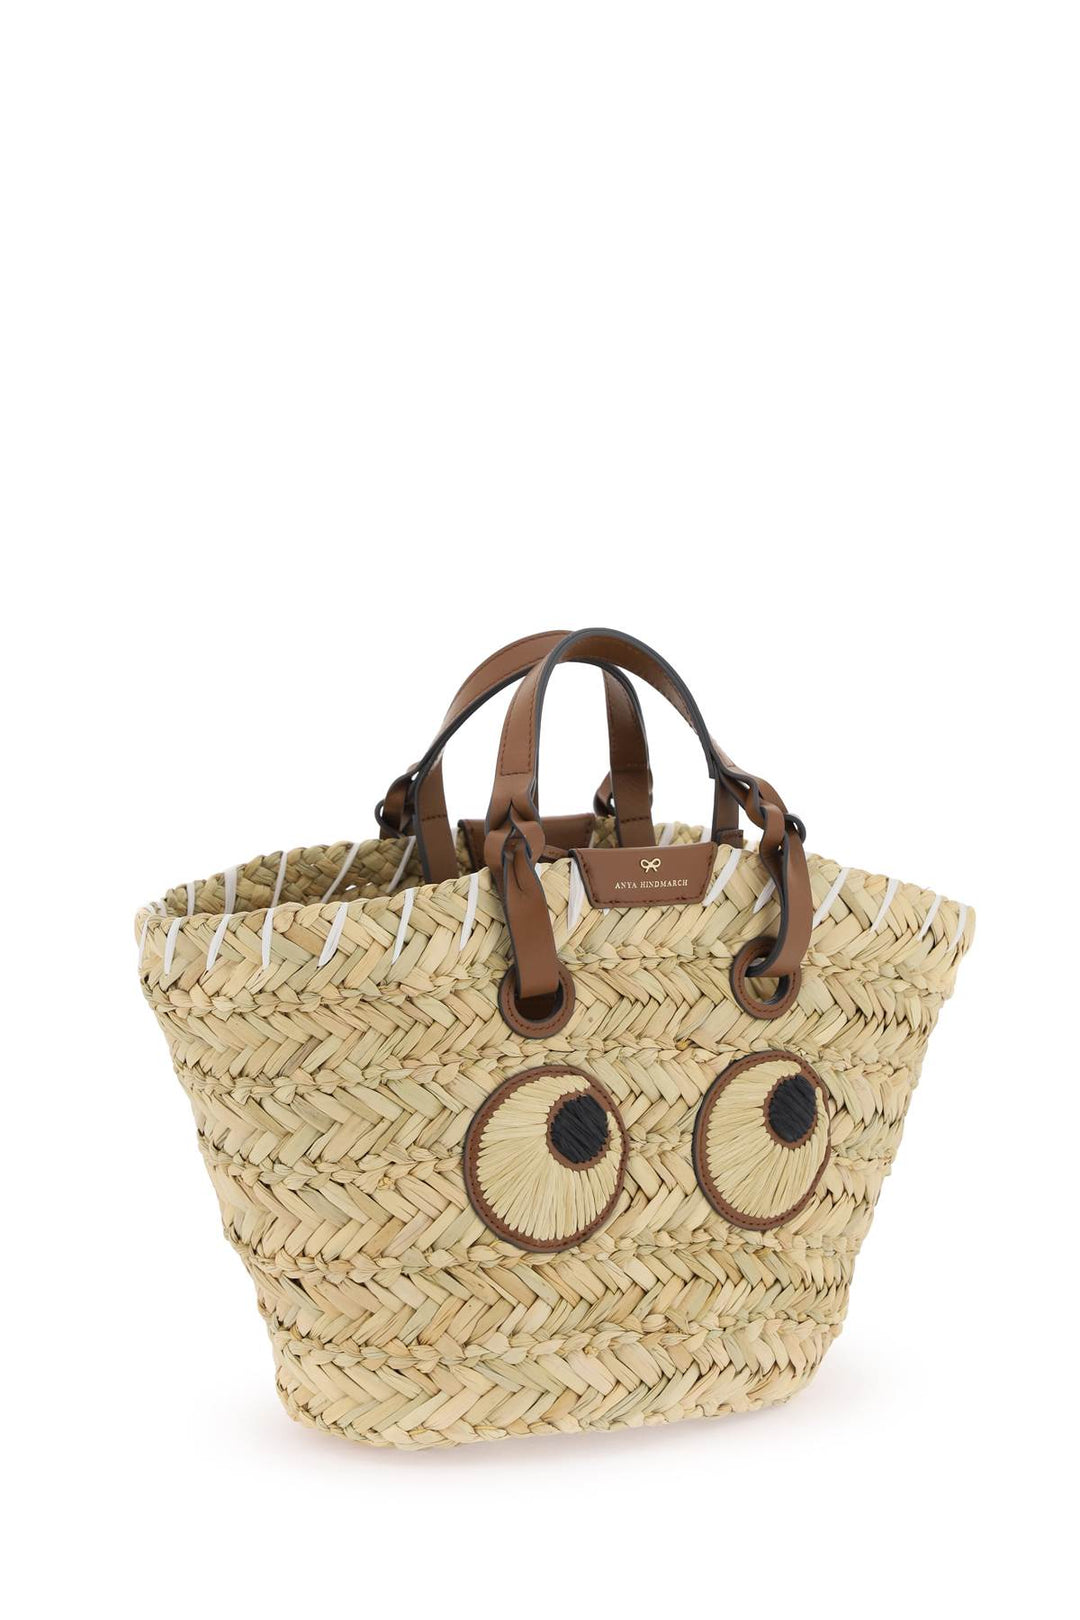 Anya Hindmarch Paper Eyes Basket Handbag   Neutro